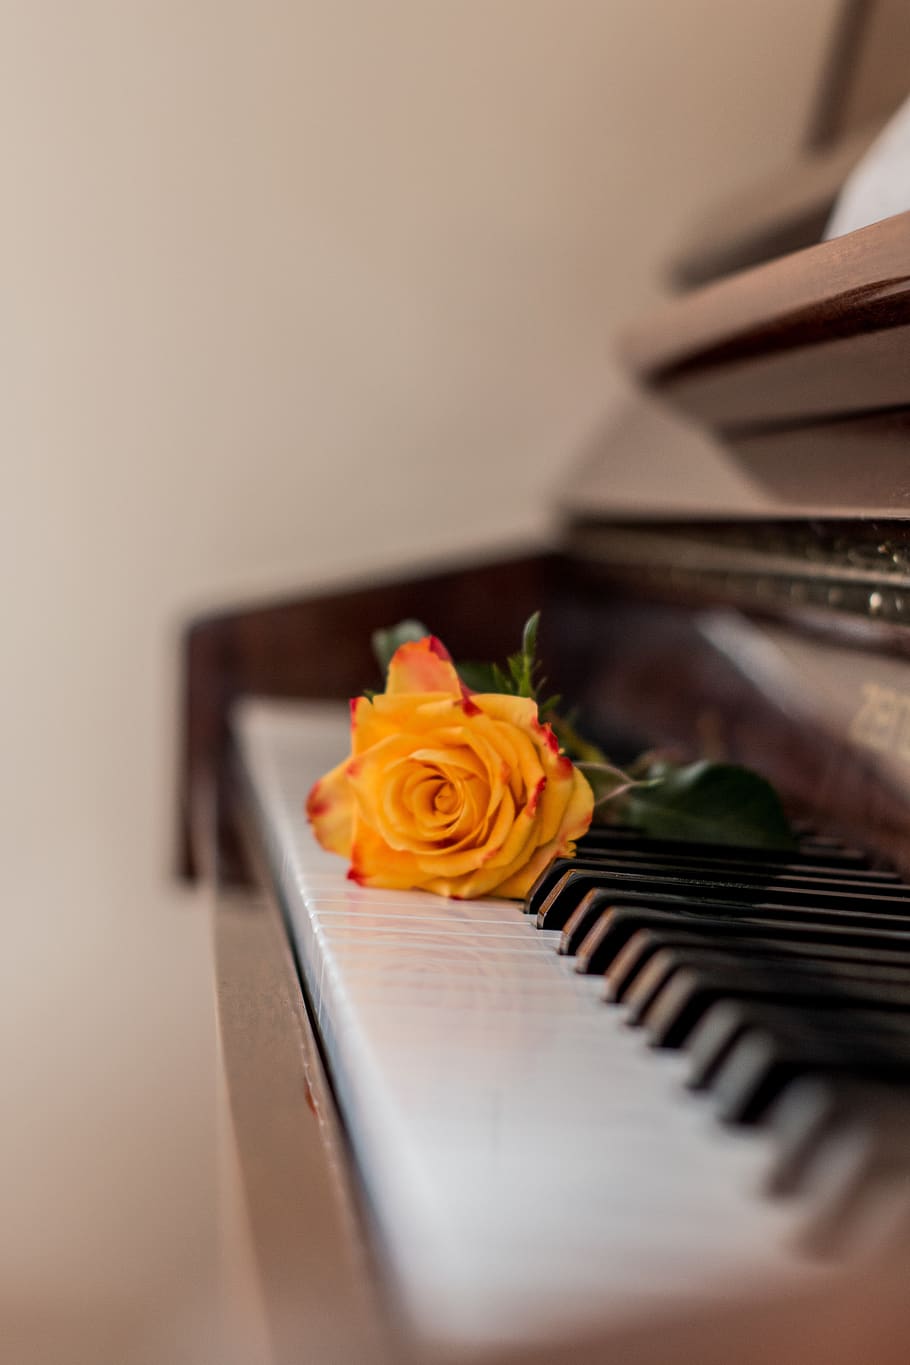 piano, music, rose, piano keys, musical instrument, phone wallpaper, flower, flowering plant, rose - flower, selective focus